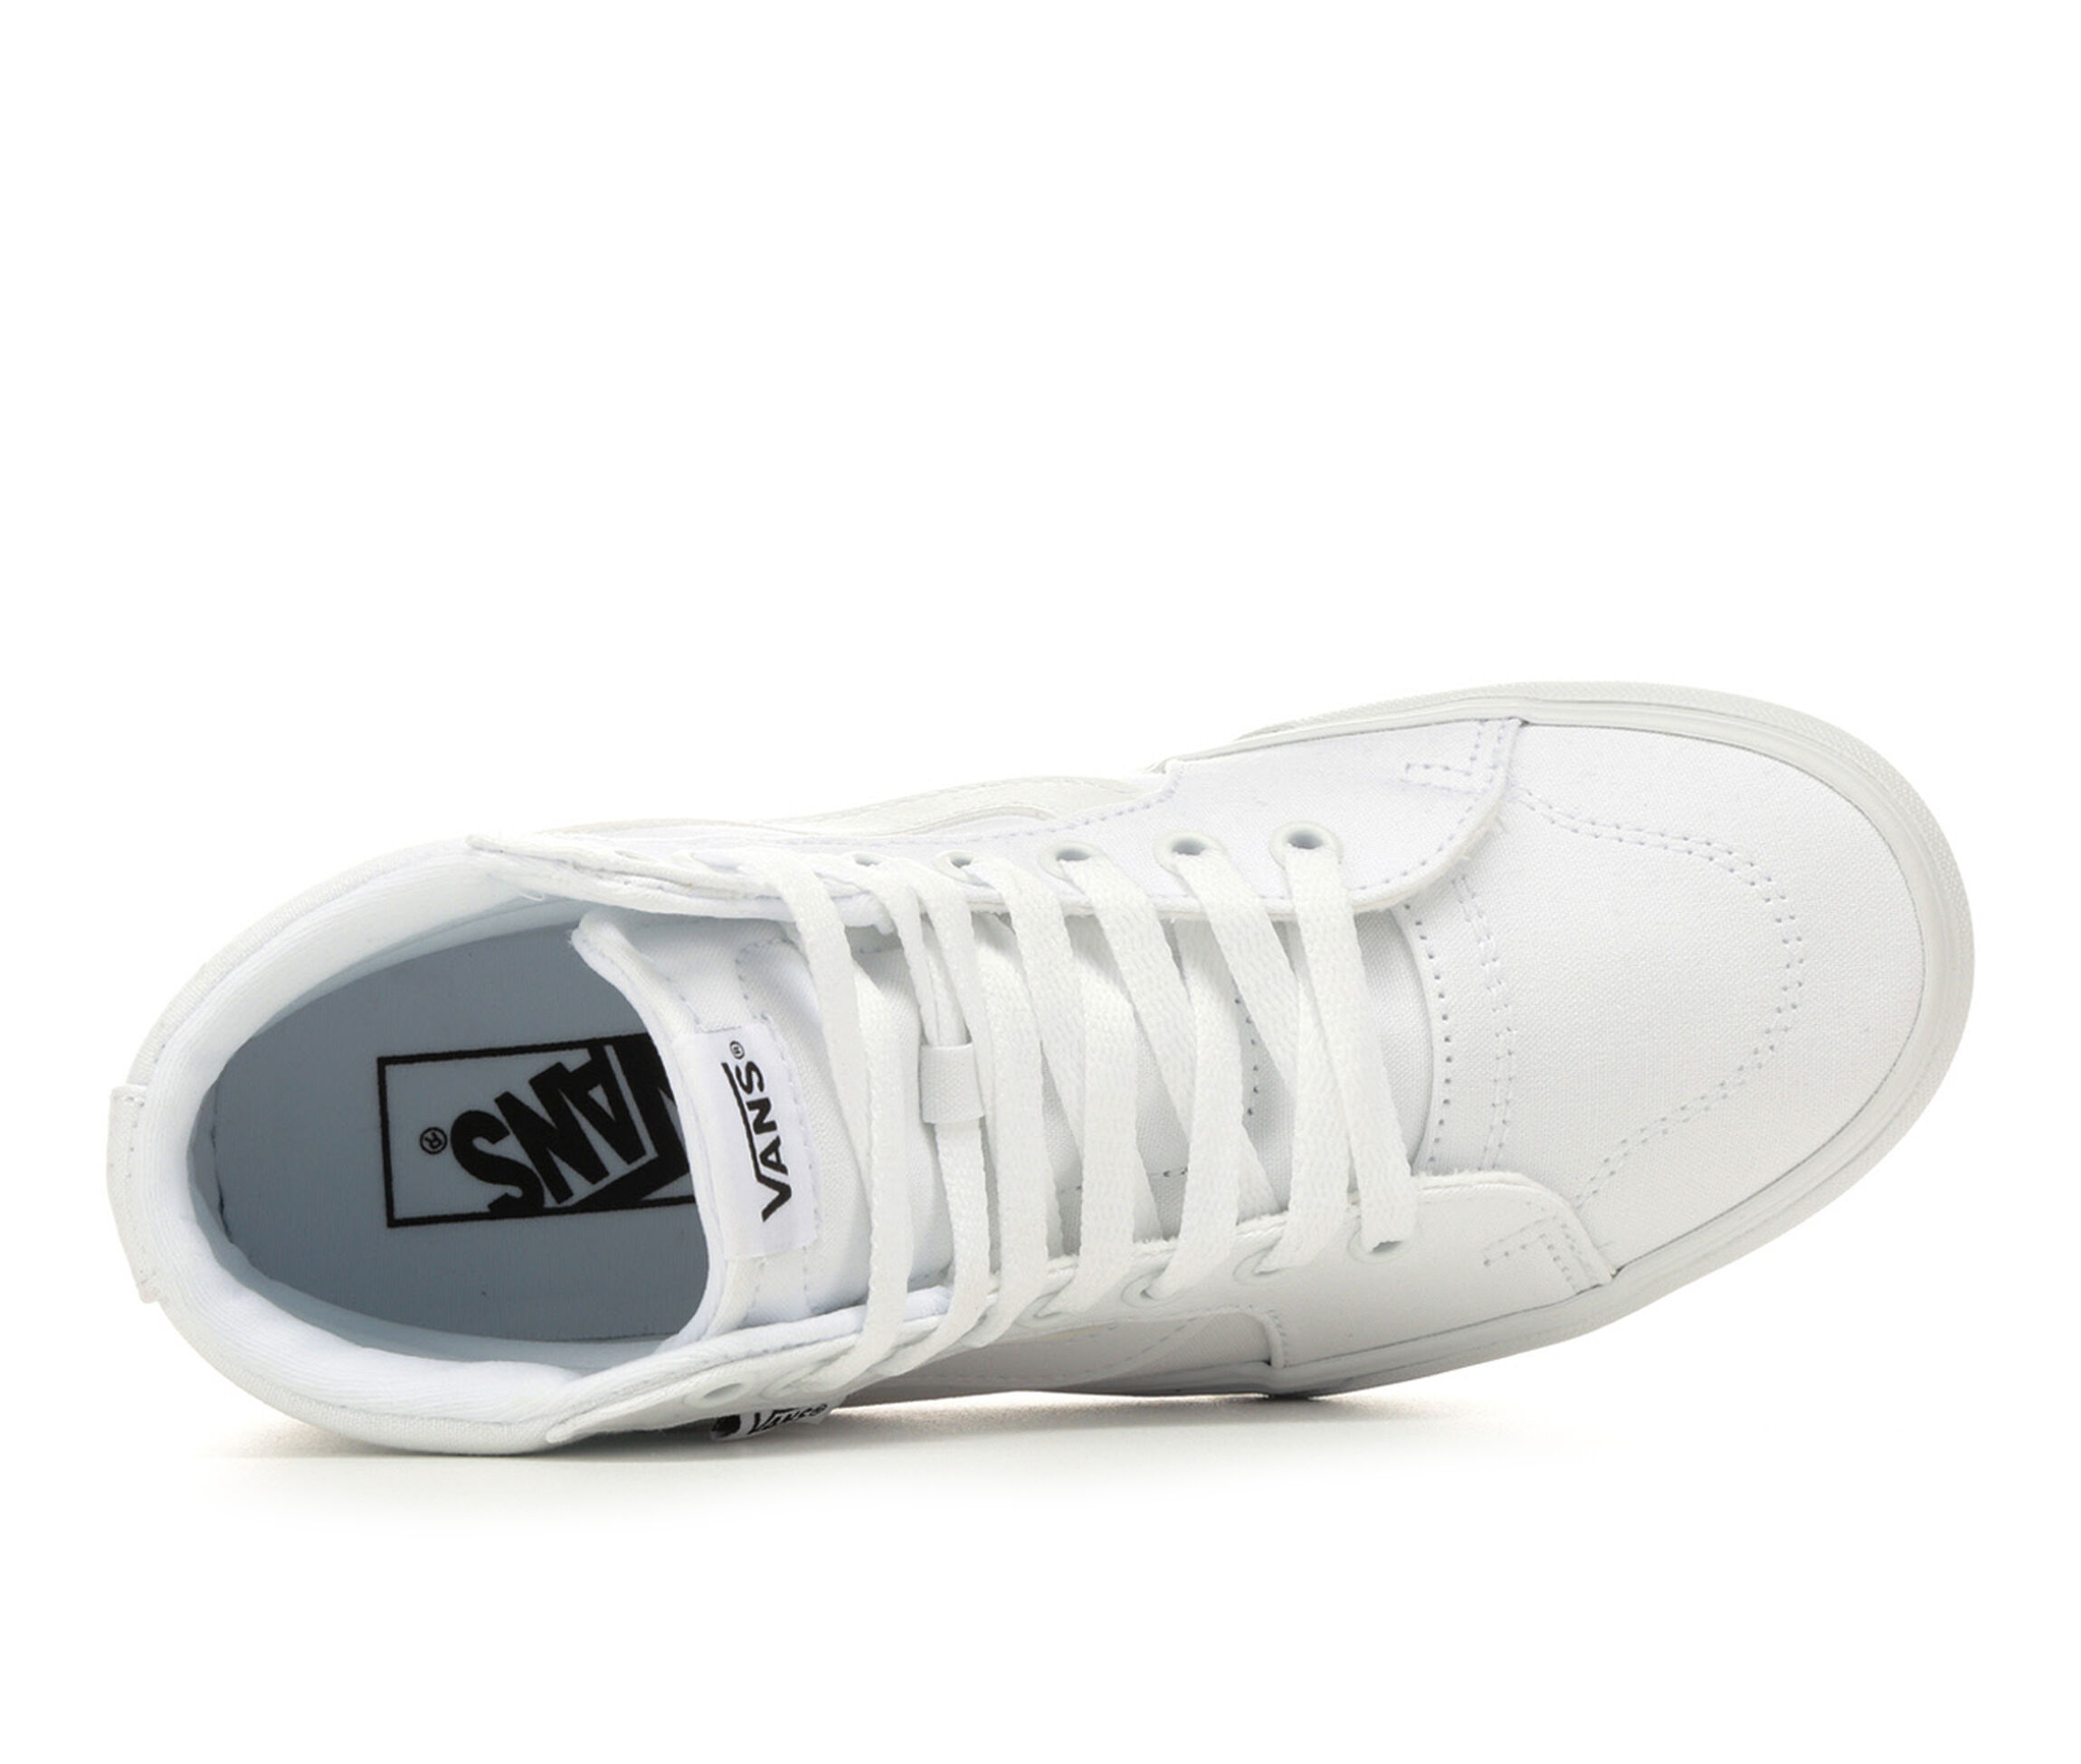 Vans Sale | $39.98 Select Styles | Shoe Carnival